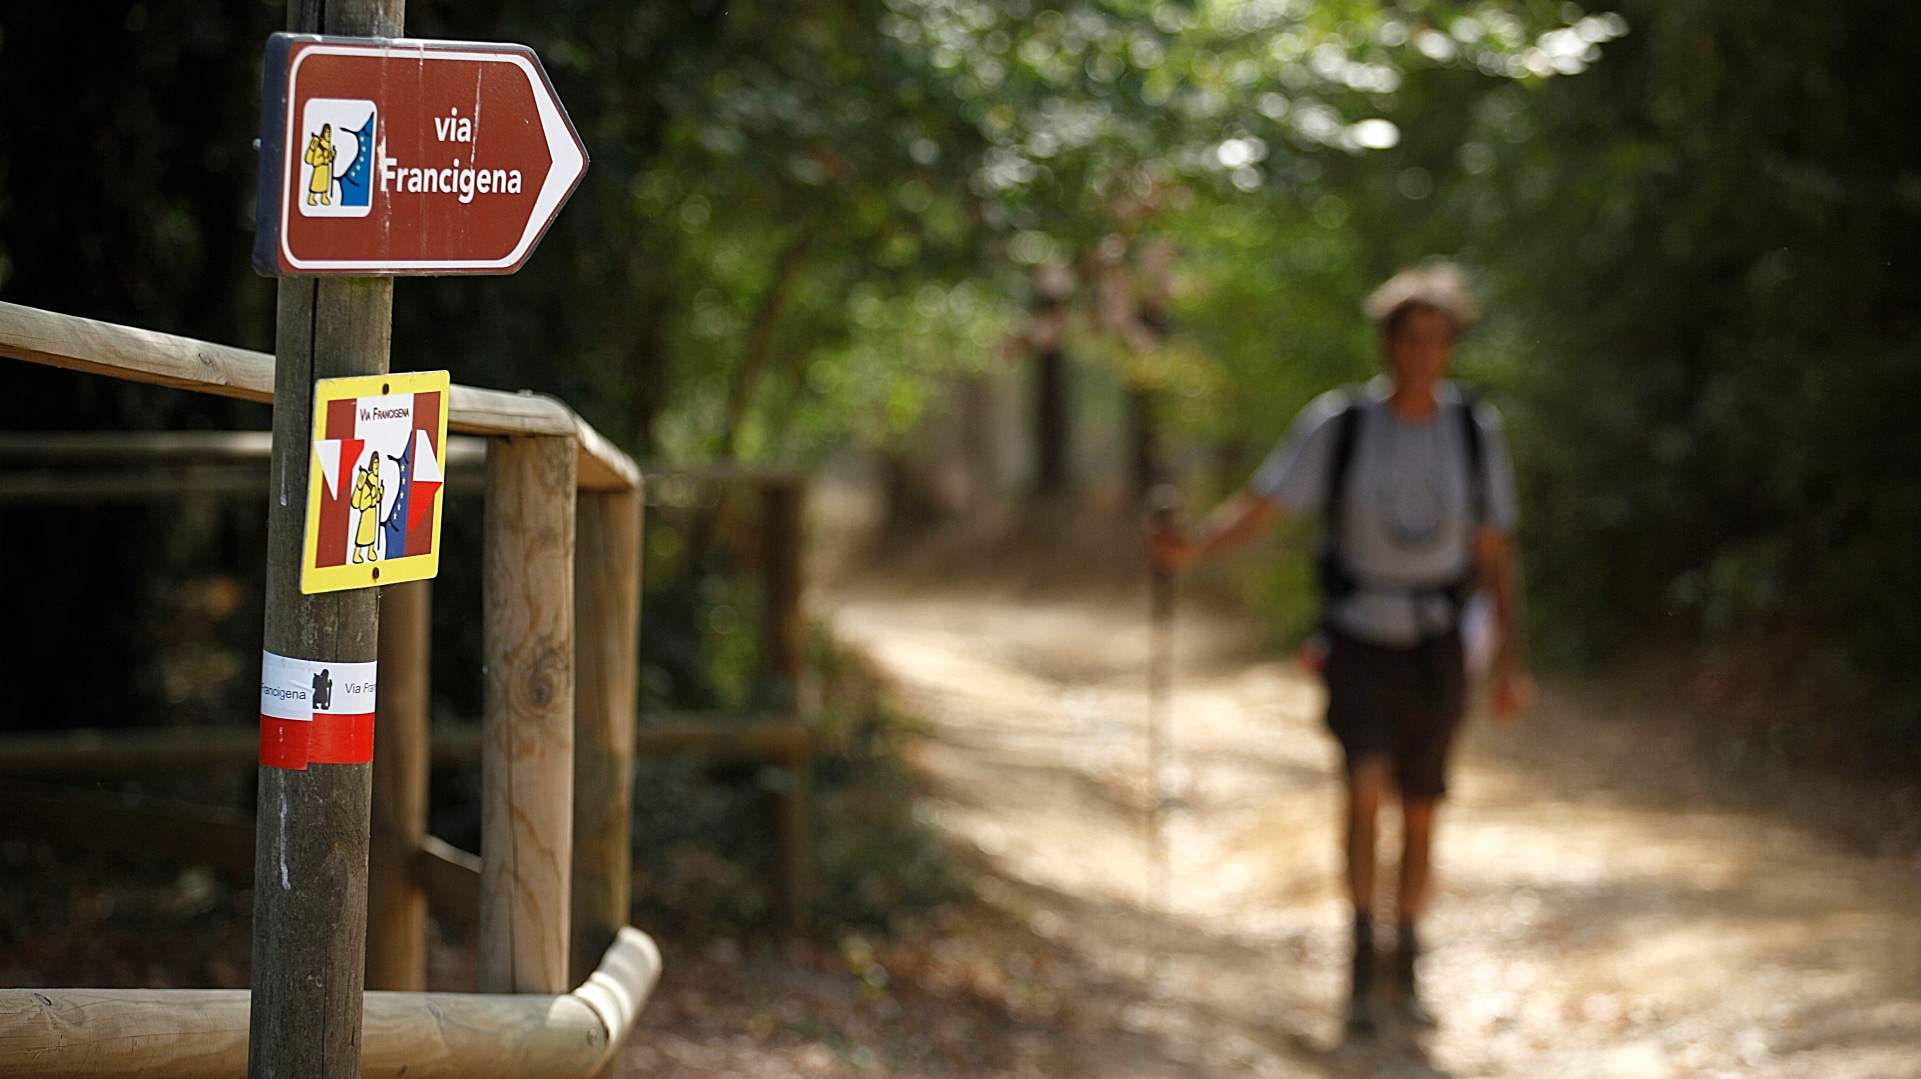 Via Francigena: Walking the 1,200-year old pilgrim path in Tuscany